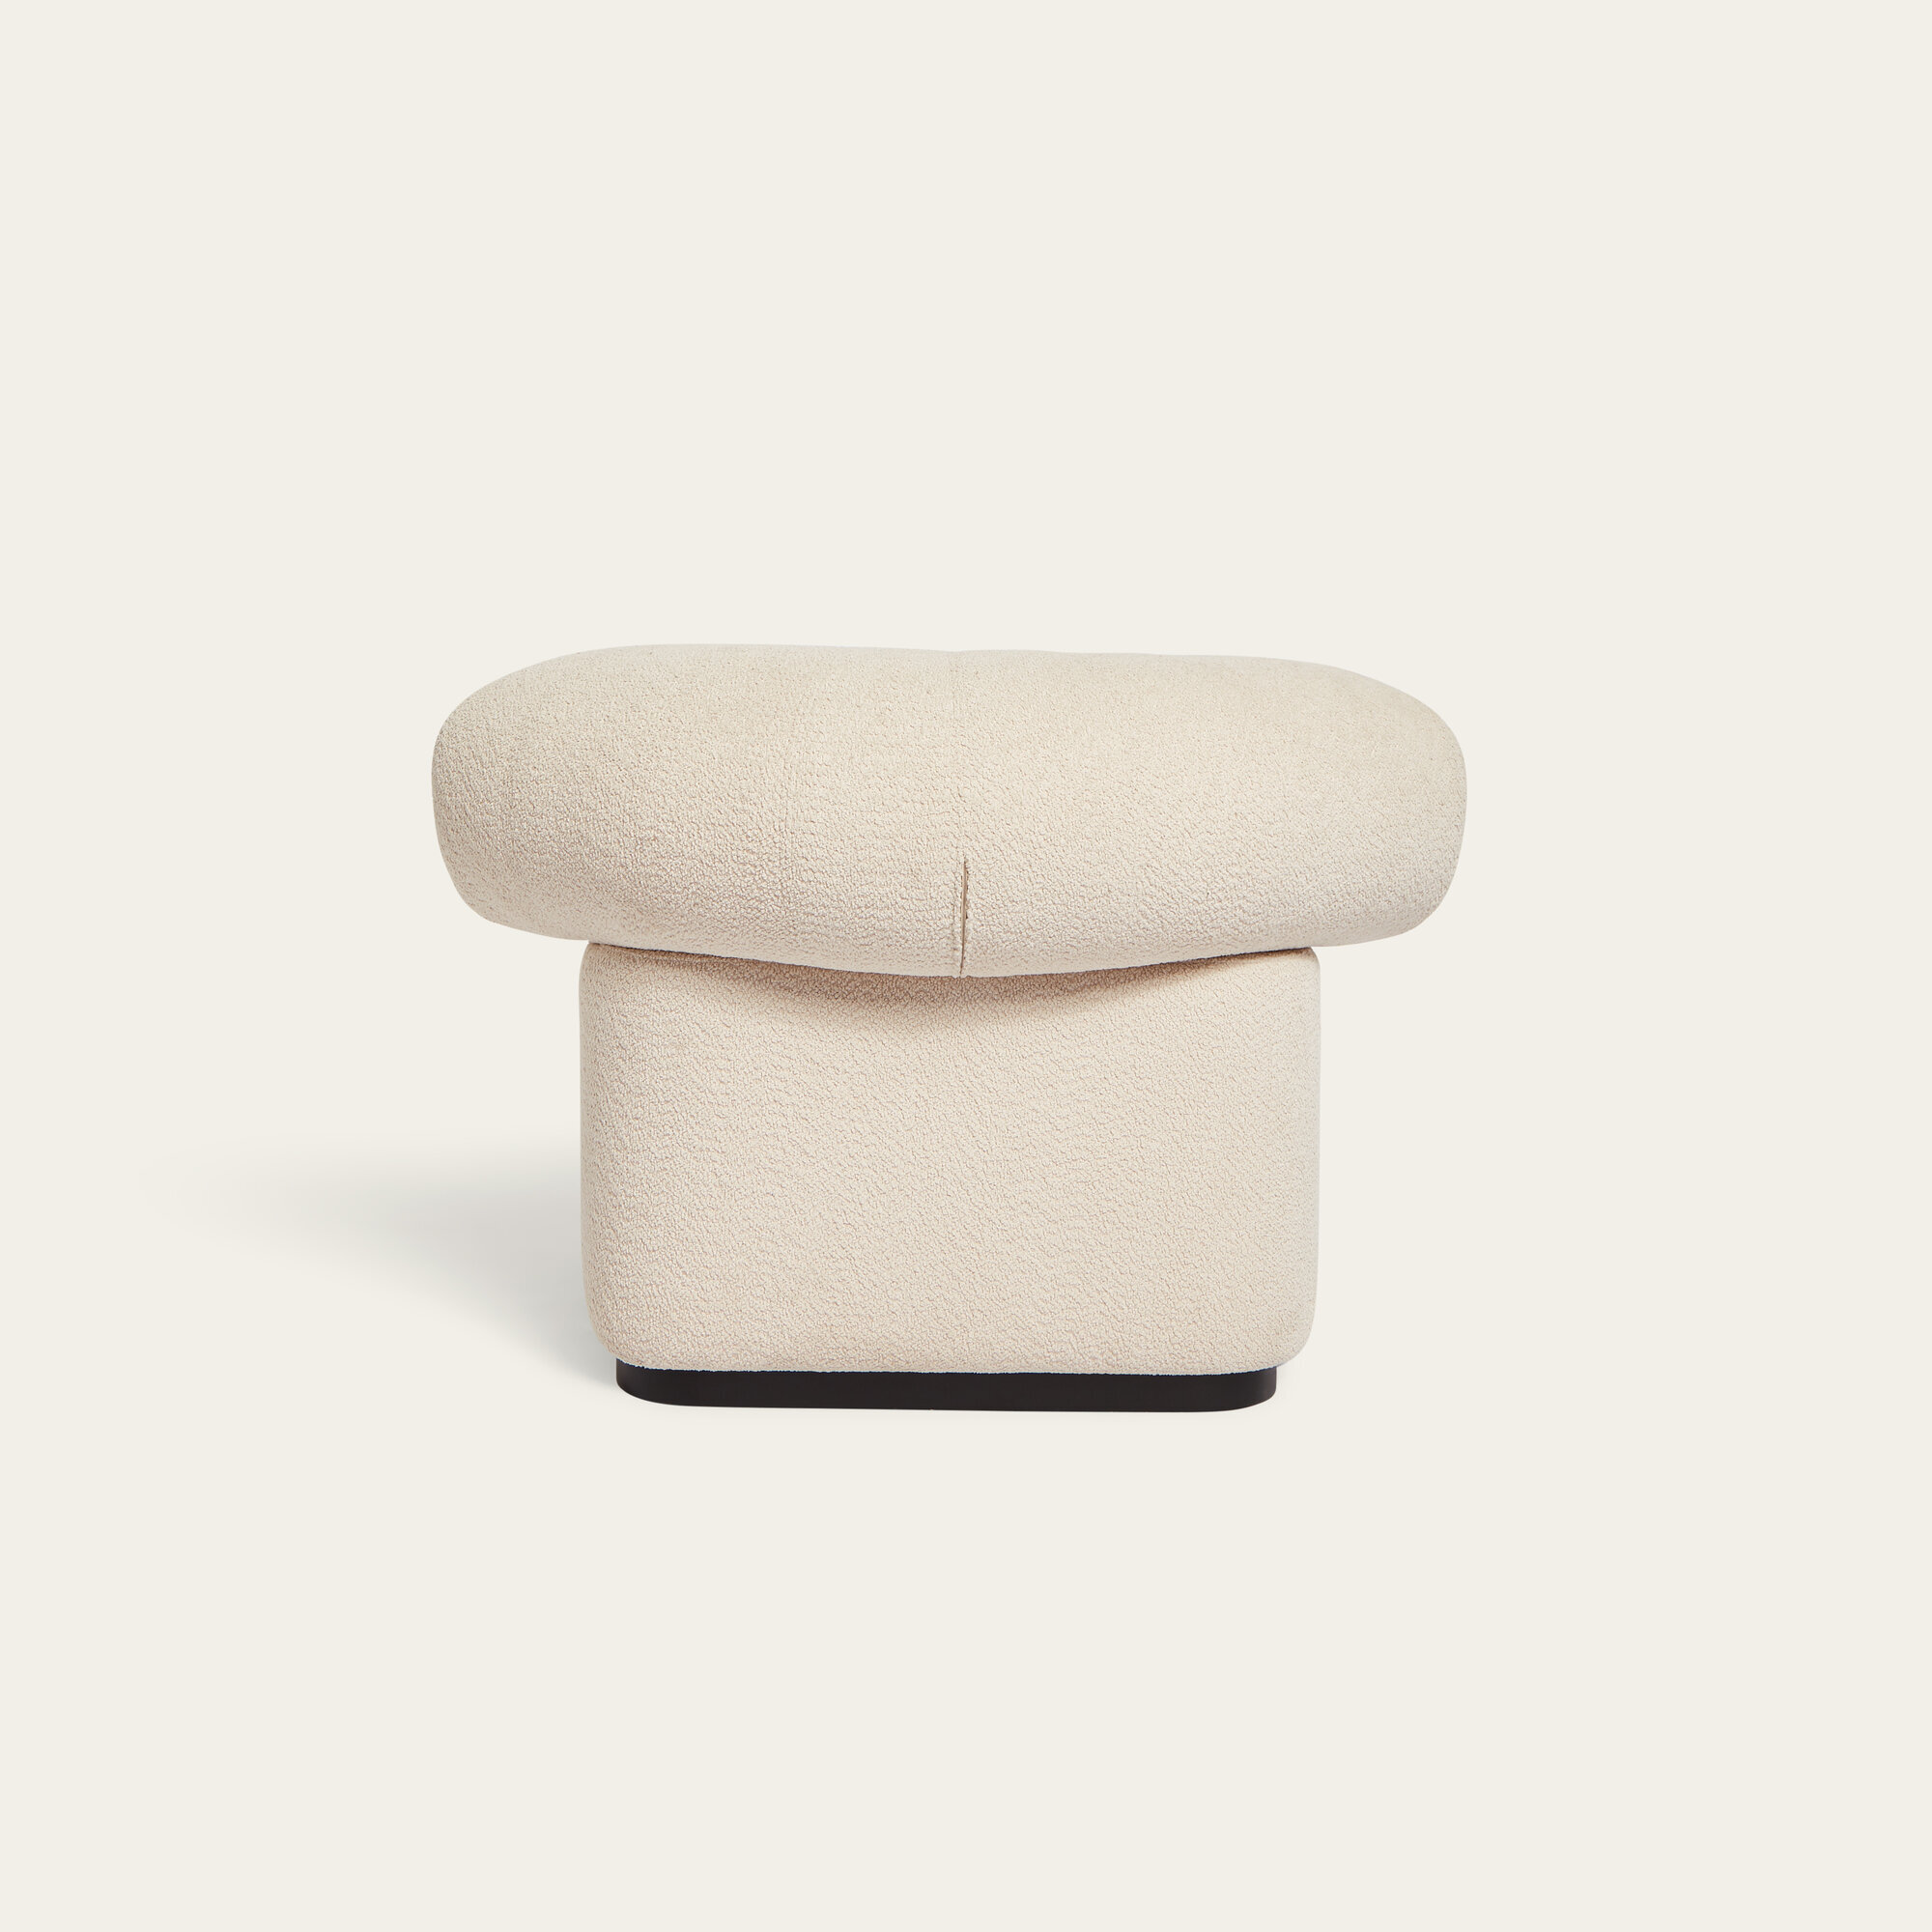 Design modern sofa | Luna lounge chair 1 seater verve 2624dingo | Studio HENK | 